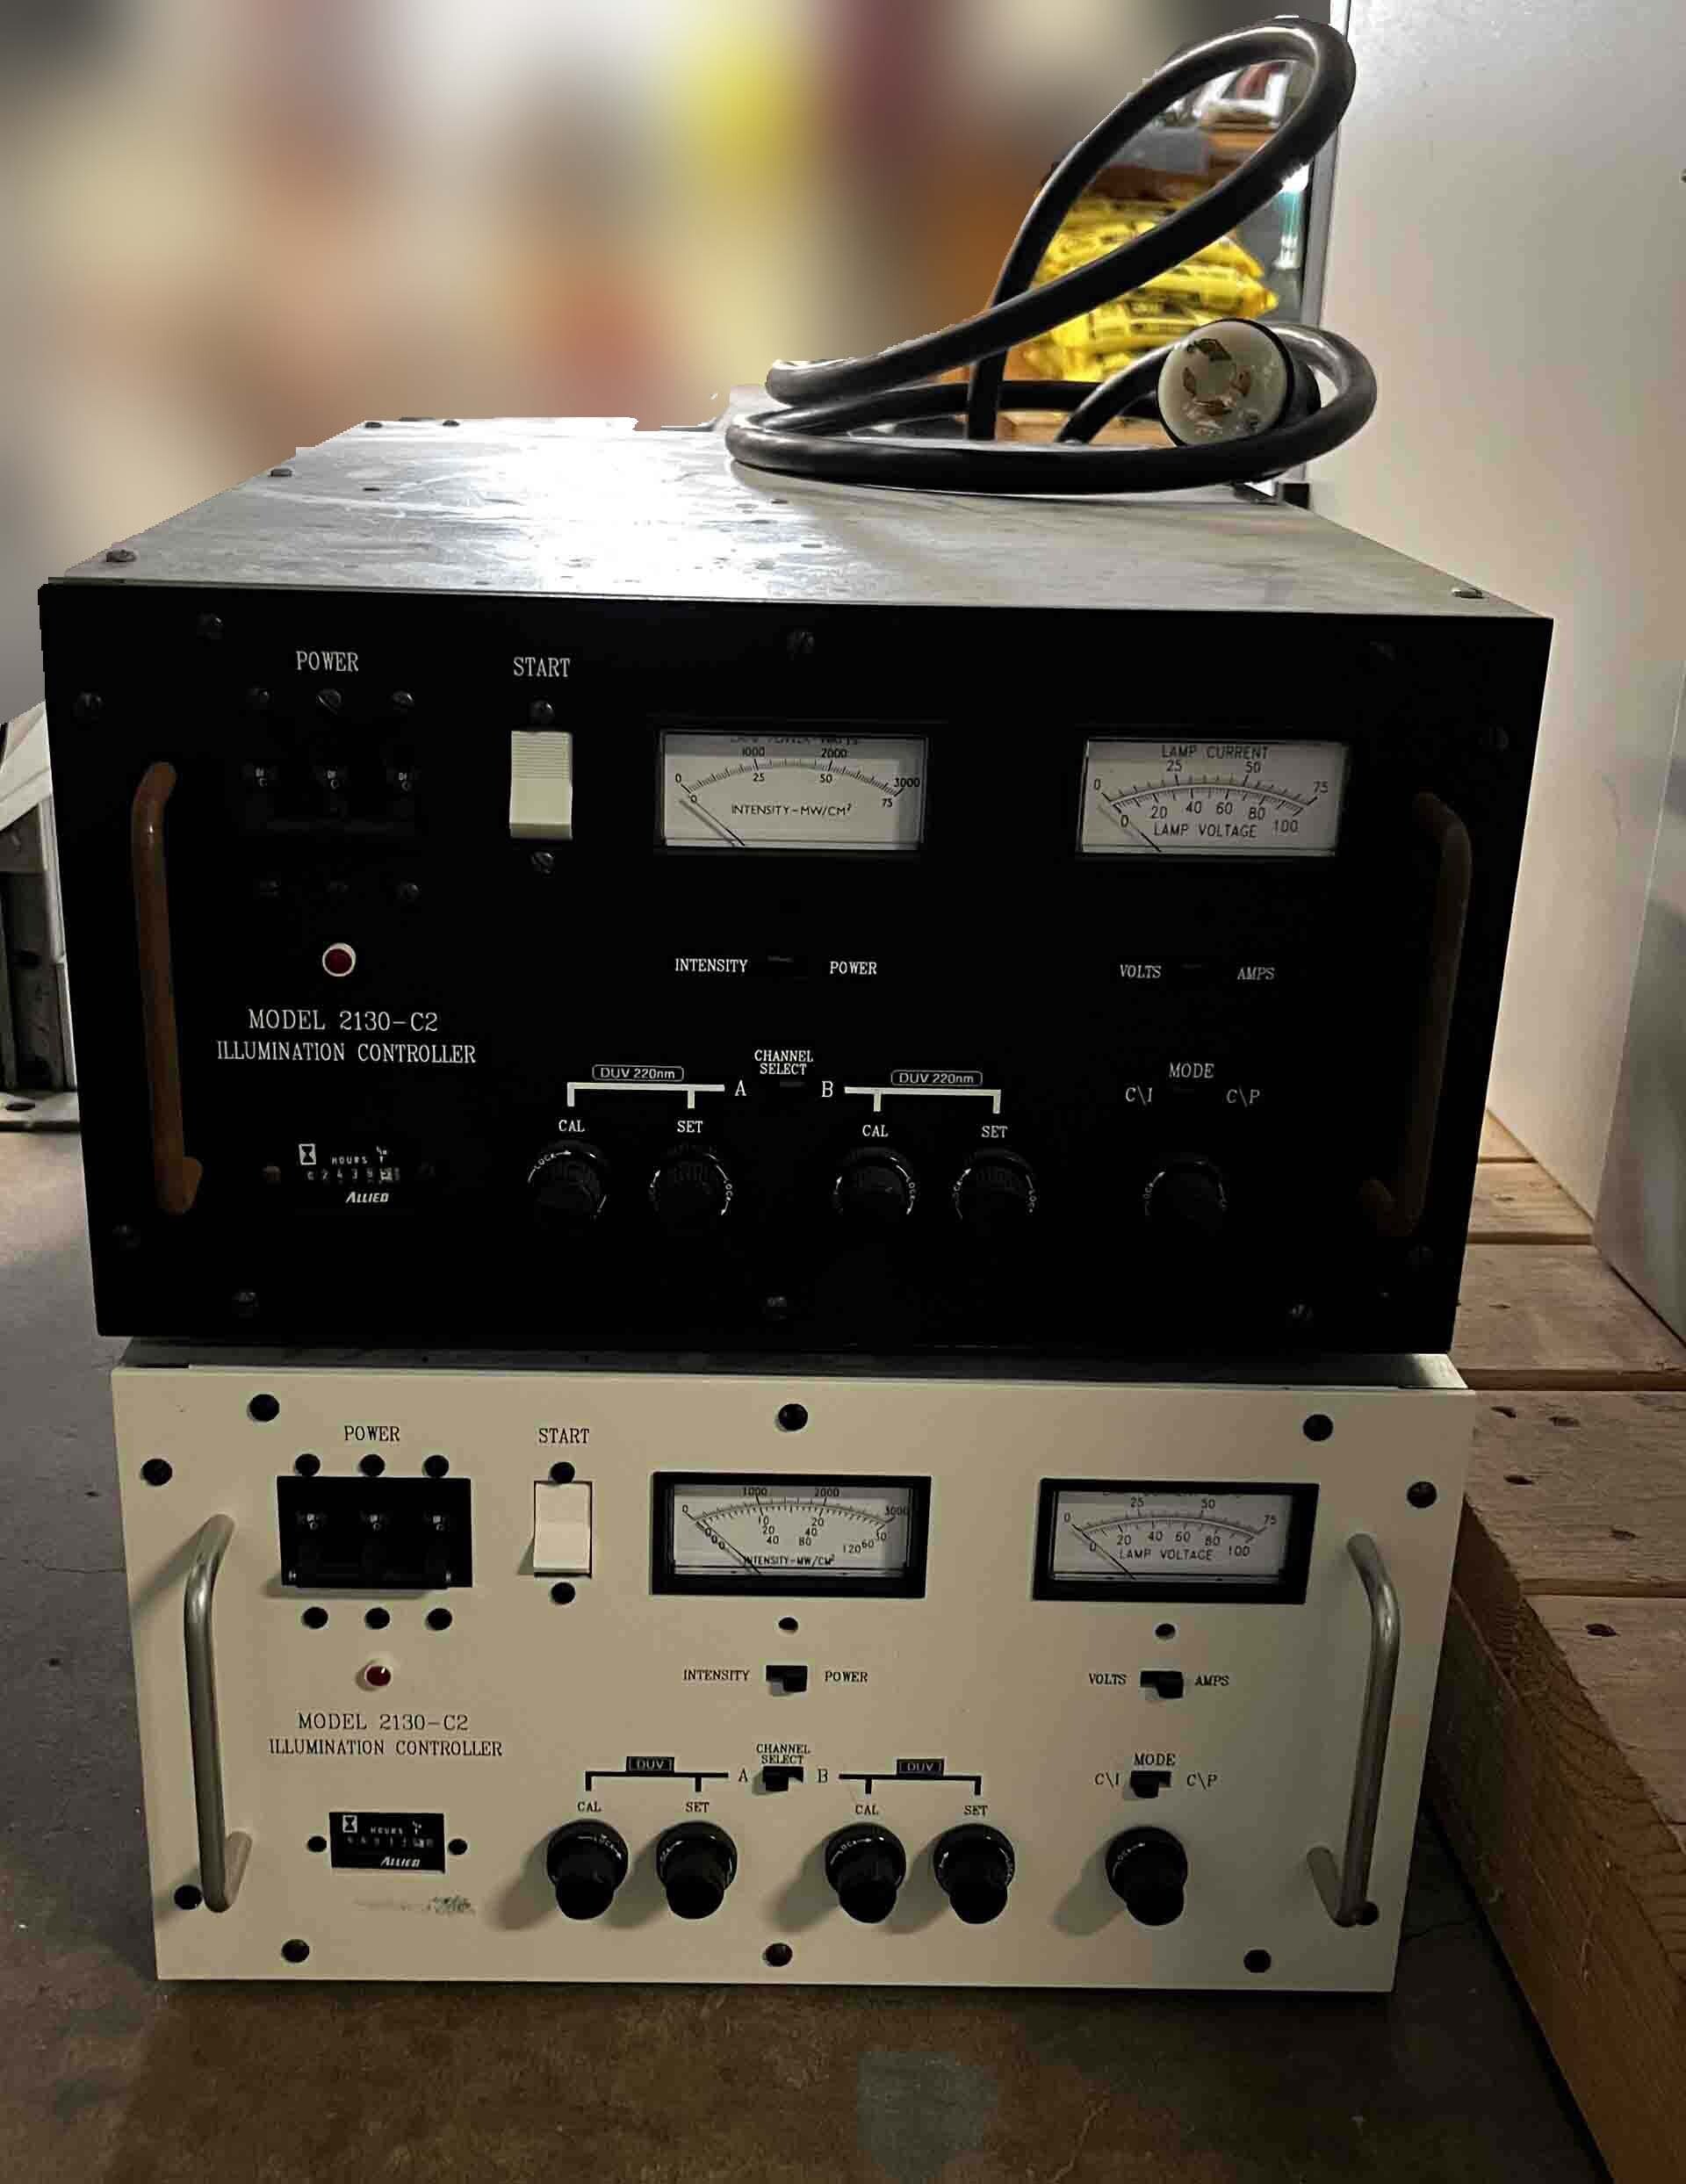 圖為 已使用的 RADIATION POWER SYSTEMS 2130-C2 待售